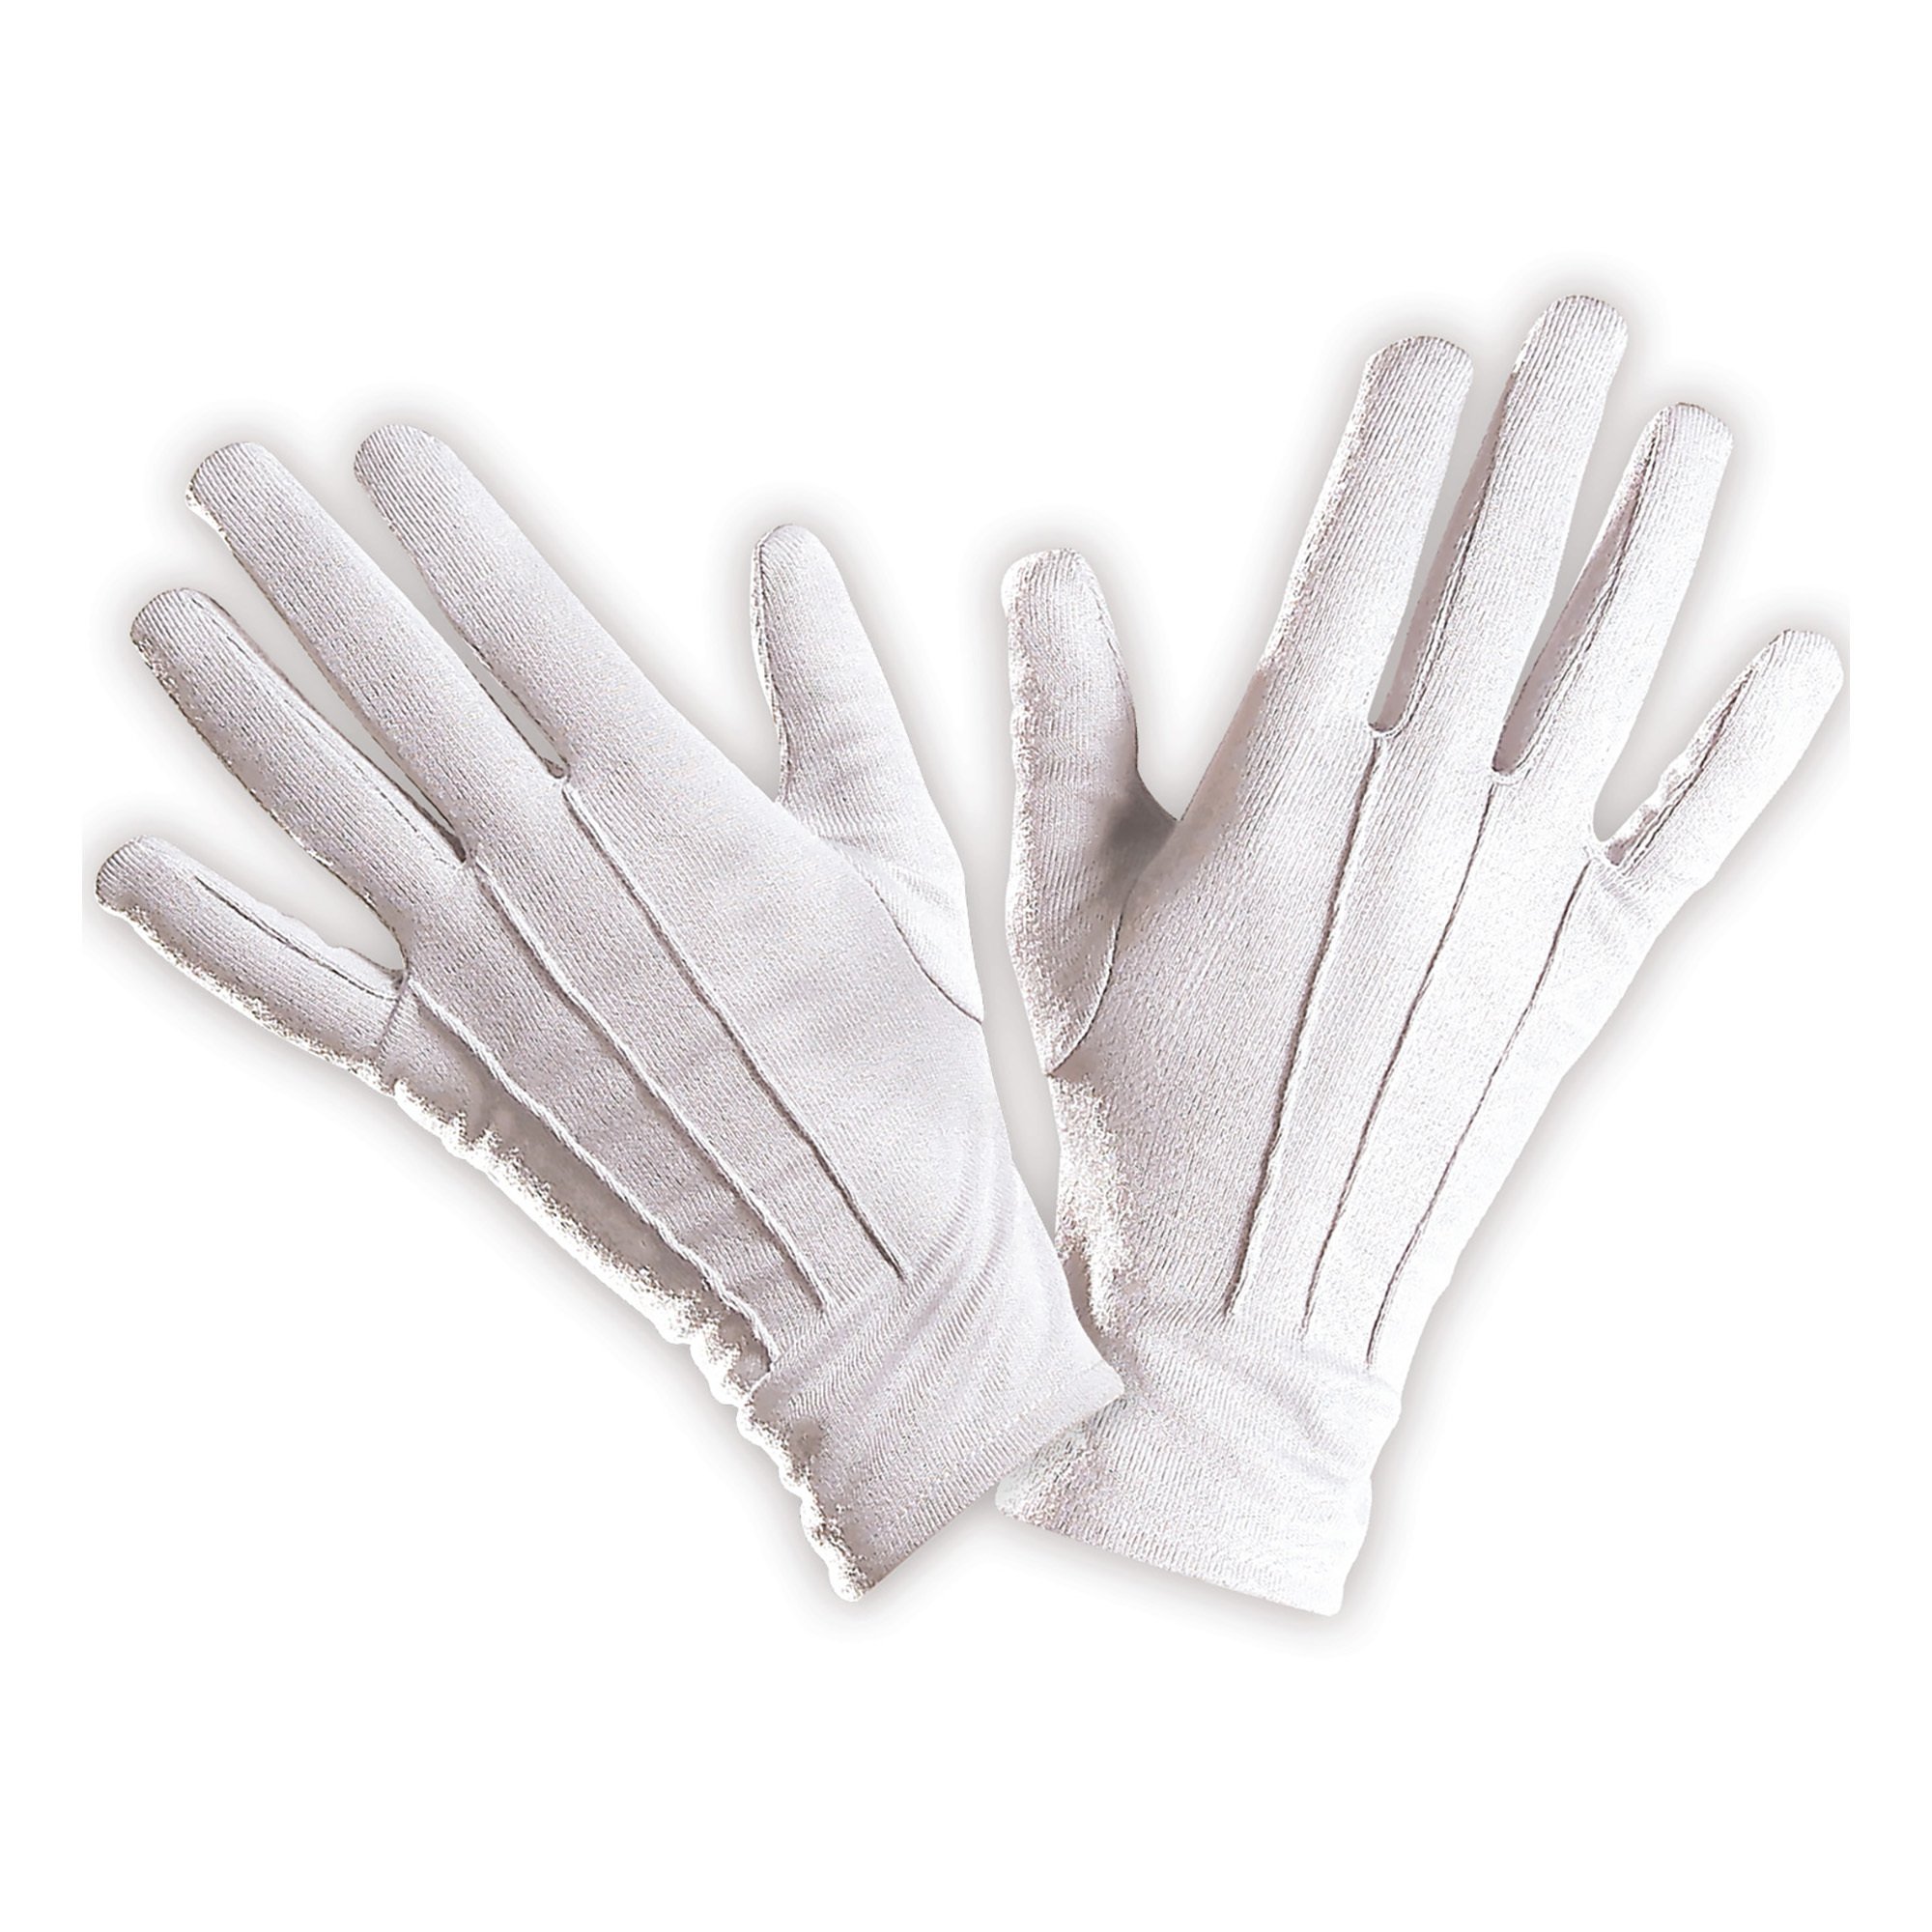 Witte nette handschoenen  kort model